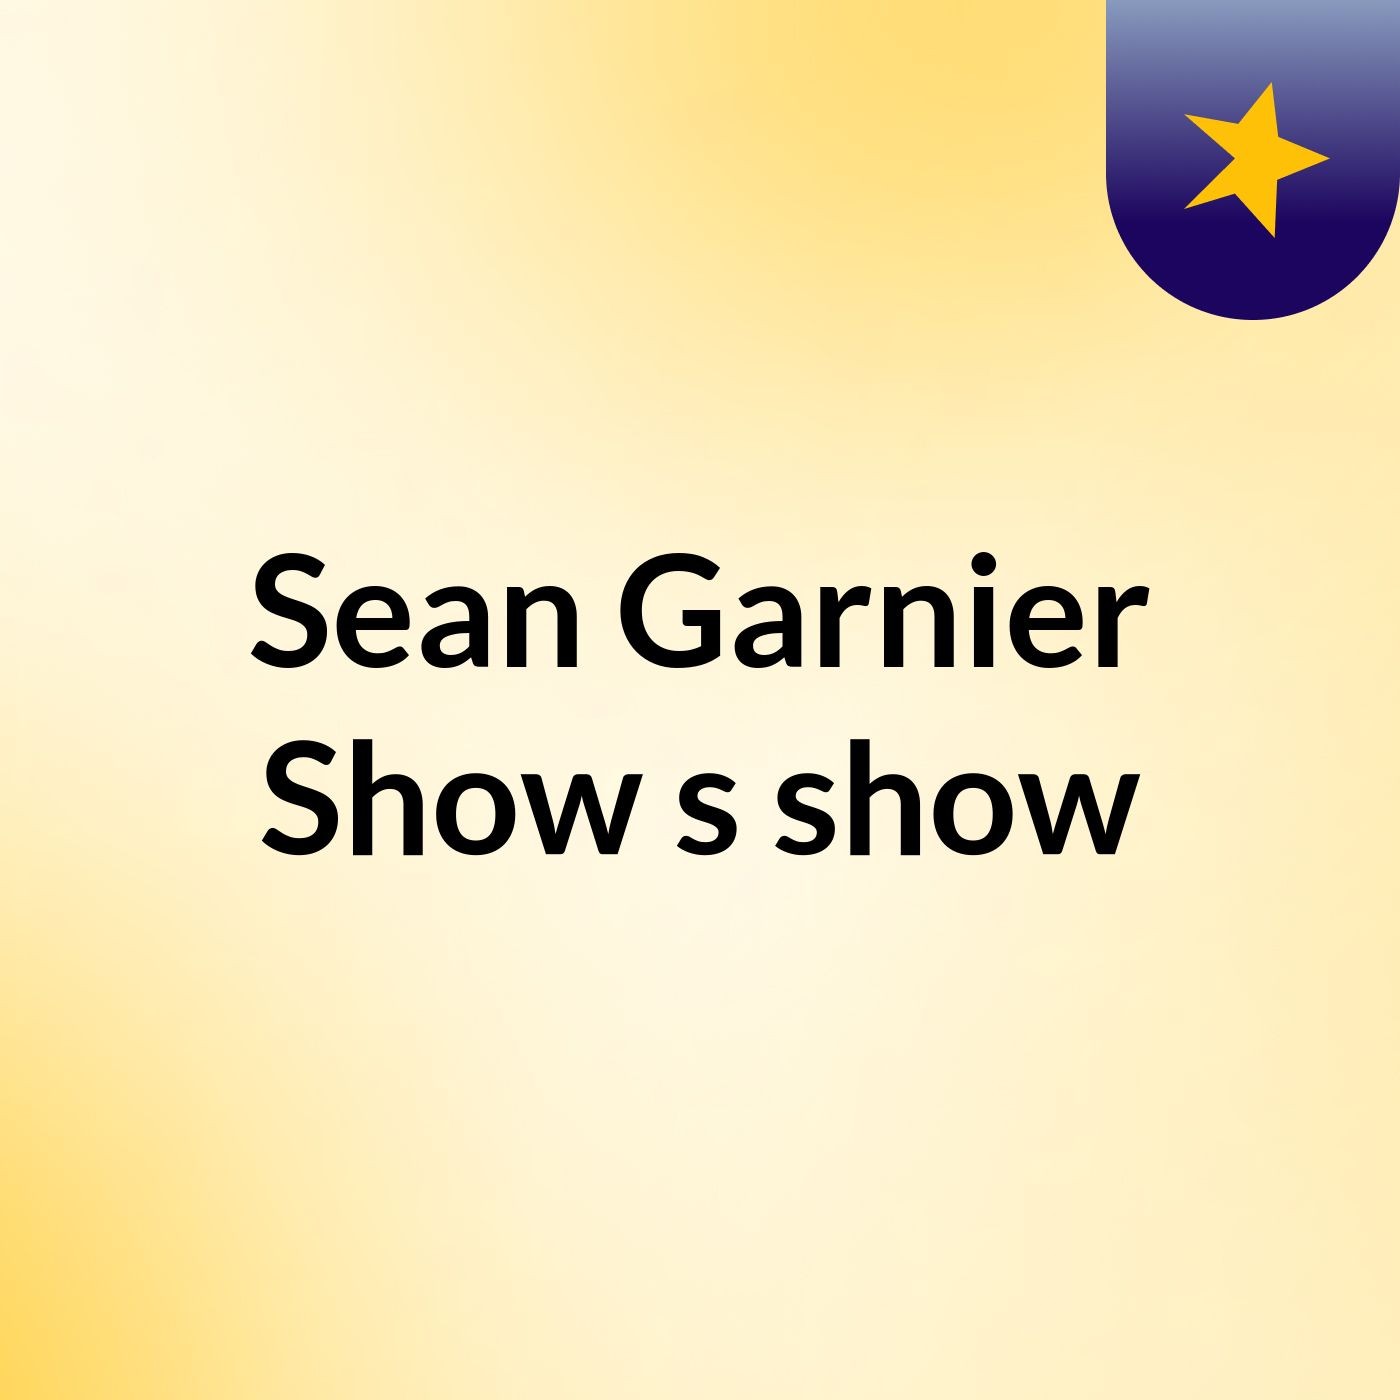 Episódio 12 - Sean Garnier Show's show